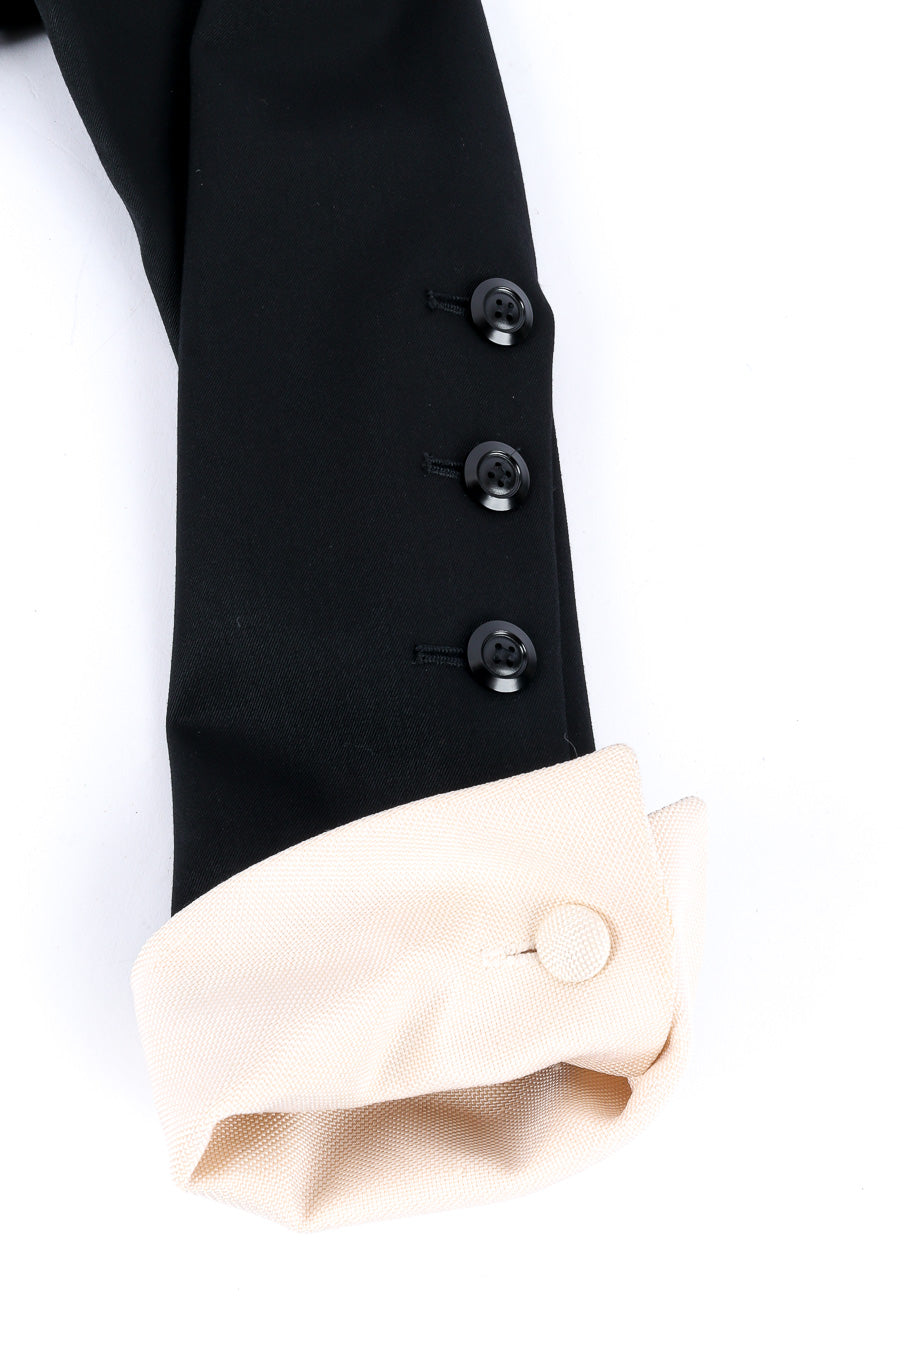 Vintage Yves Saint Laurent Collared Blazer Dress sleeve button closure closeup @Recessla